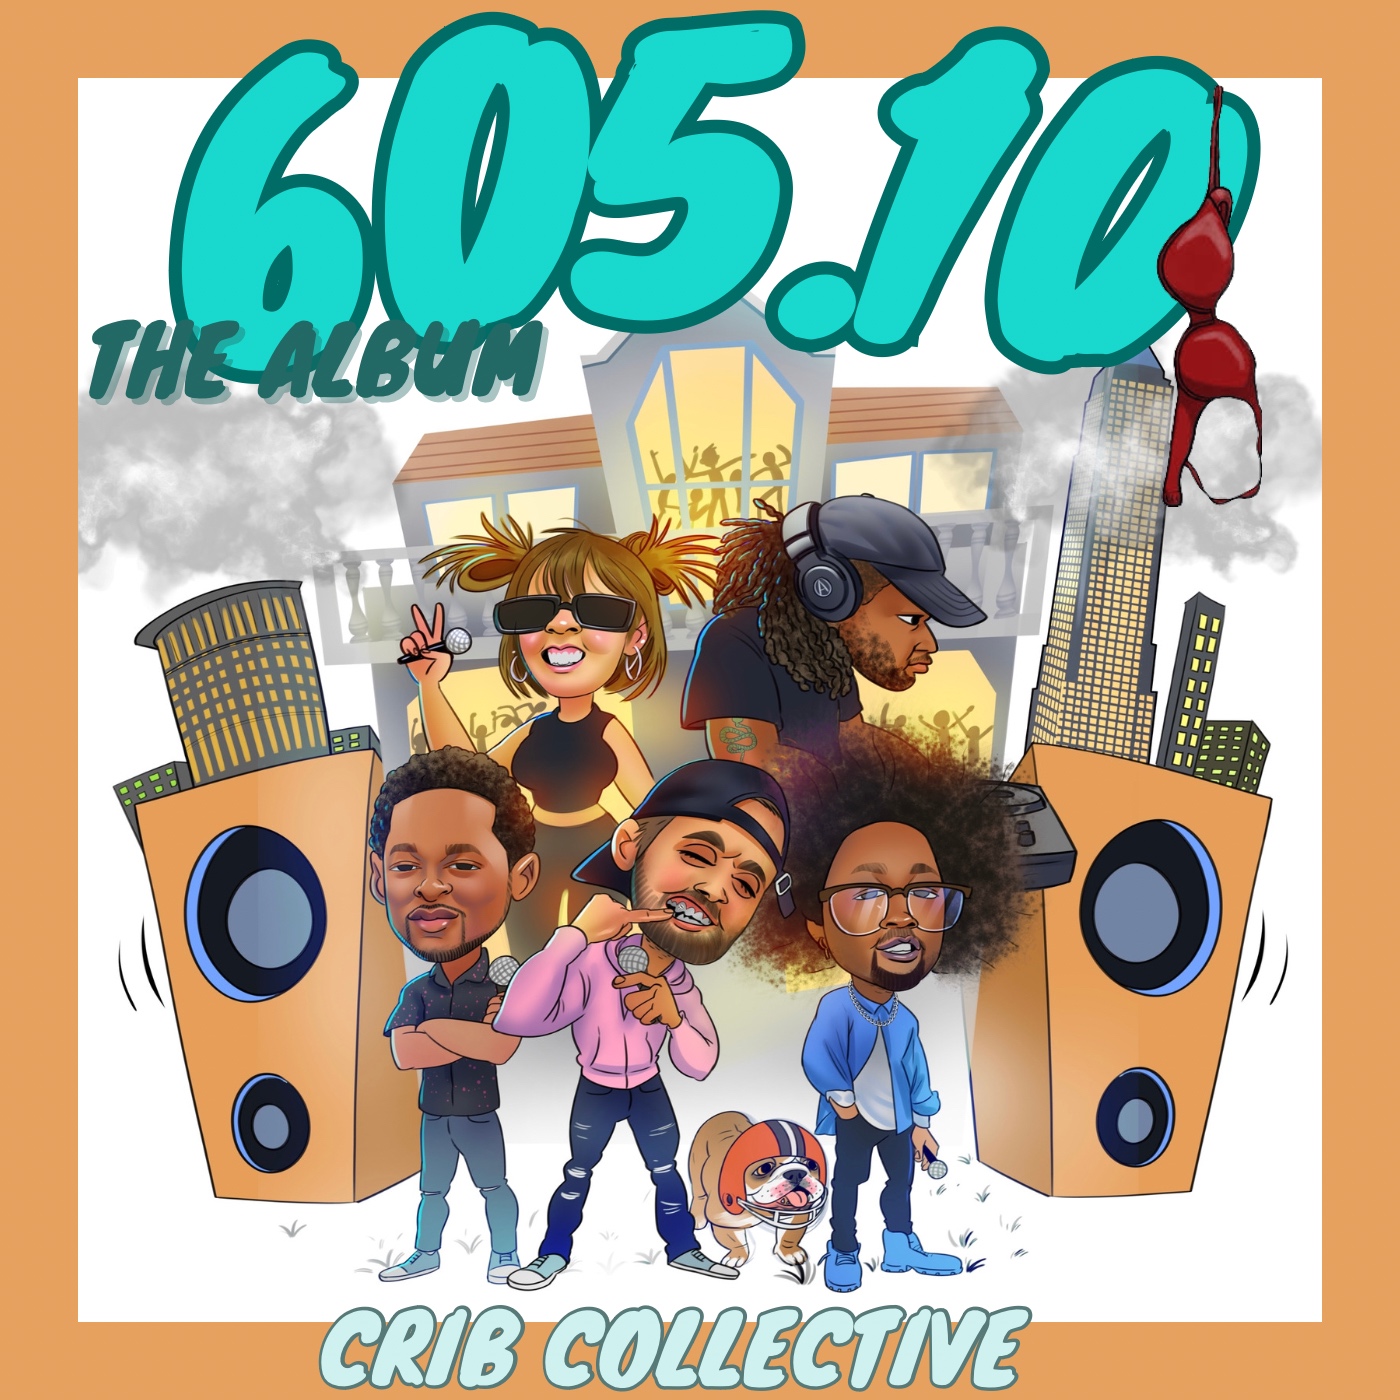 Crib Collective - 605.10